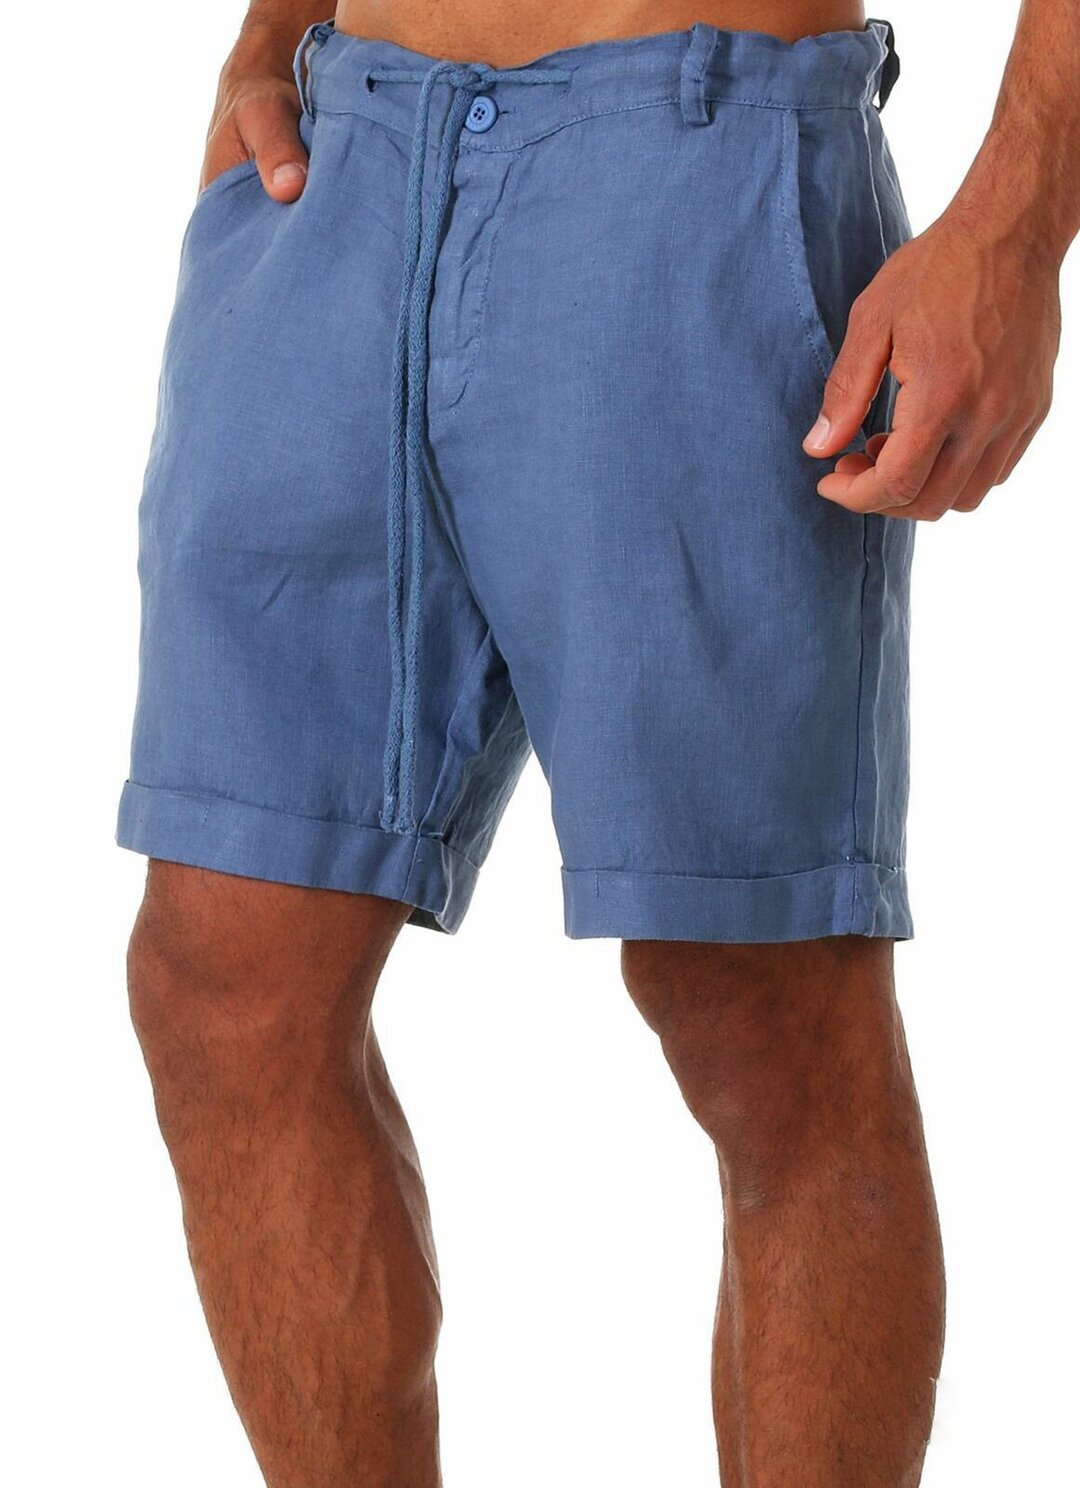 Men's solid color lace-up sports casual pants short